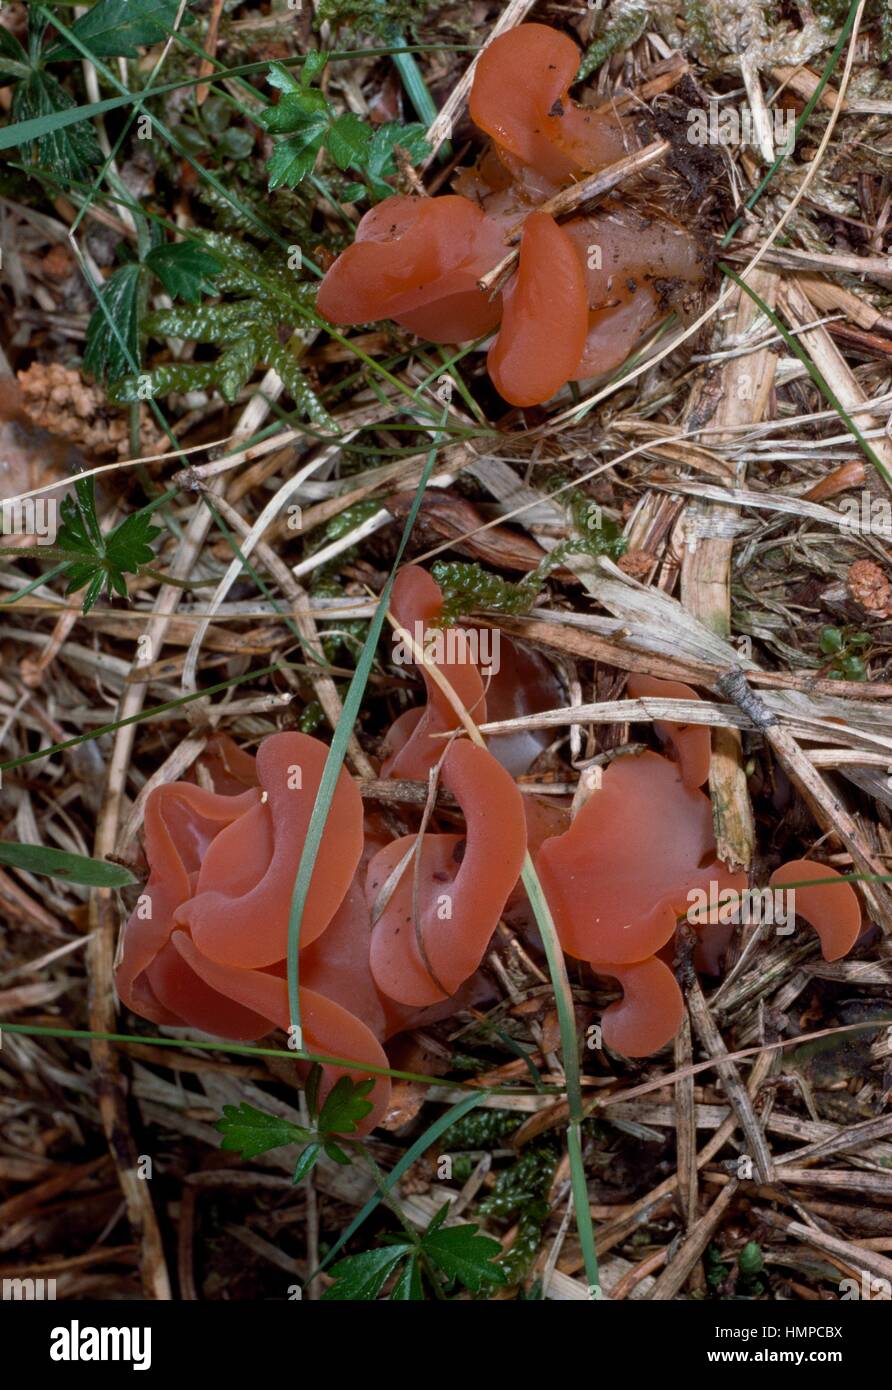 Gelée d'abricot (Tremella helvelloides ou Guepinia rufa), Dacrymycetaceae. Banque D'Images